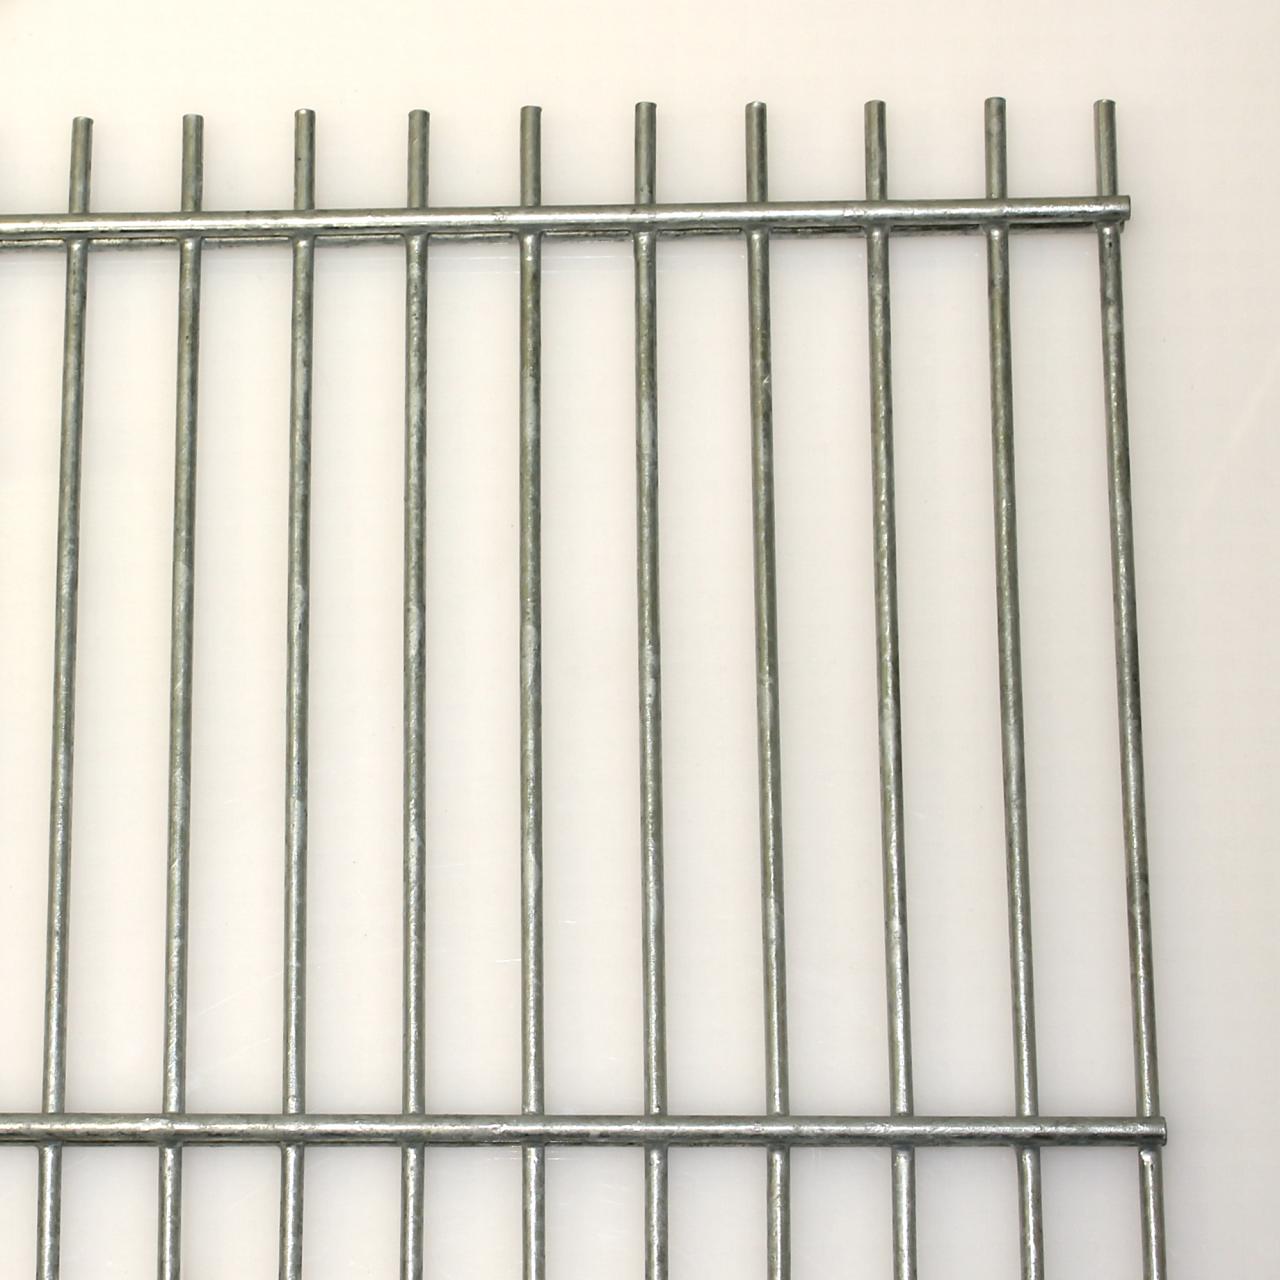 Befestigung Zaun Schraube Matten Doppelstabmattenzaun Halterung Inbus 5,5 200 x 